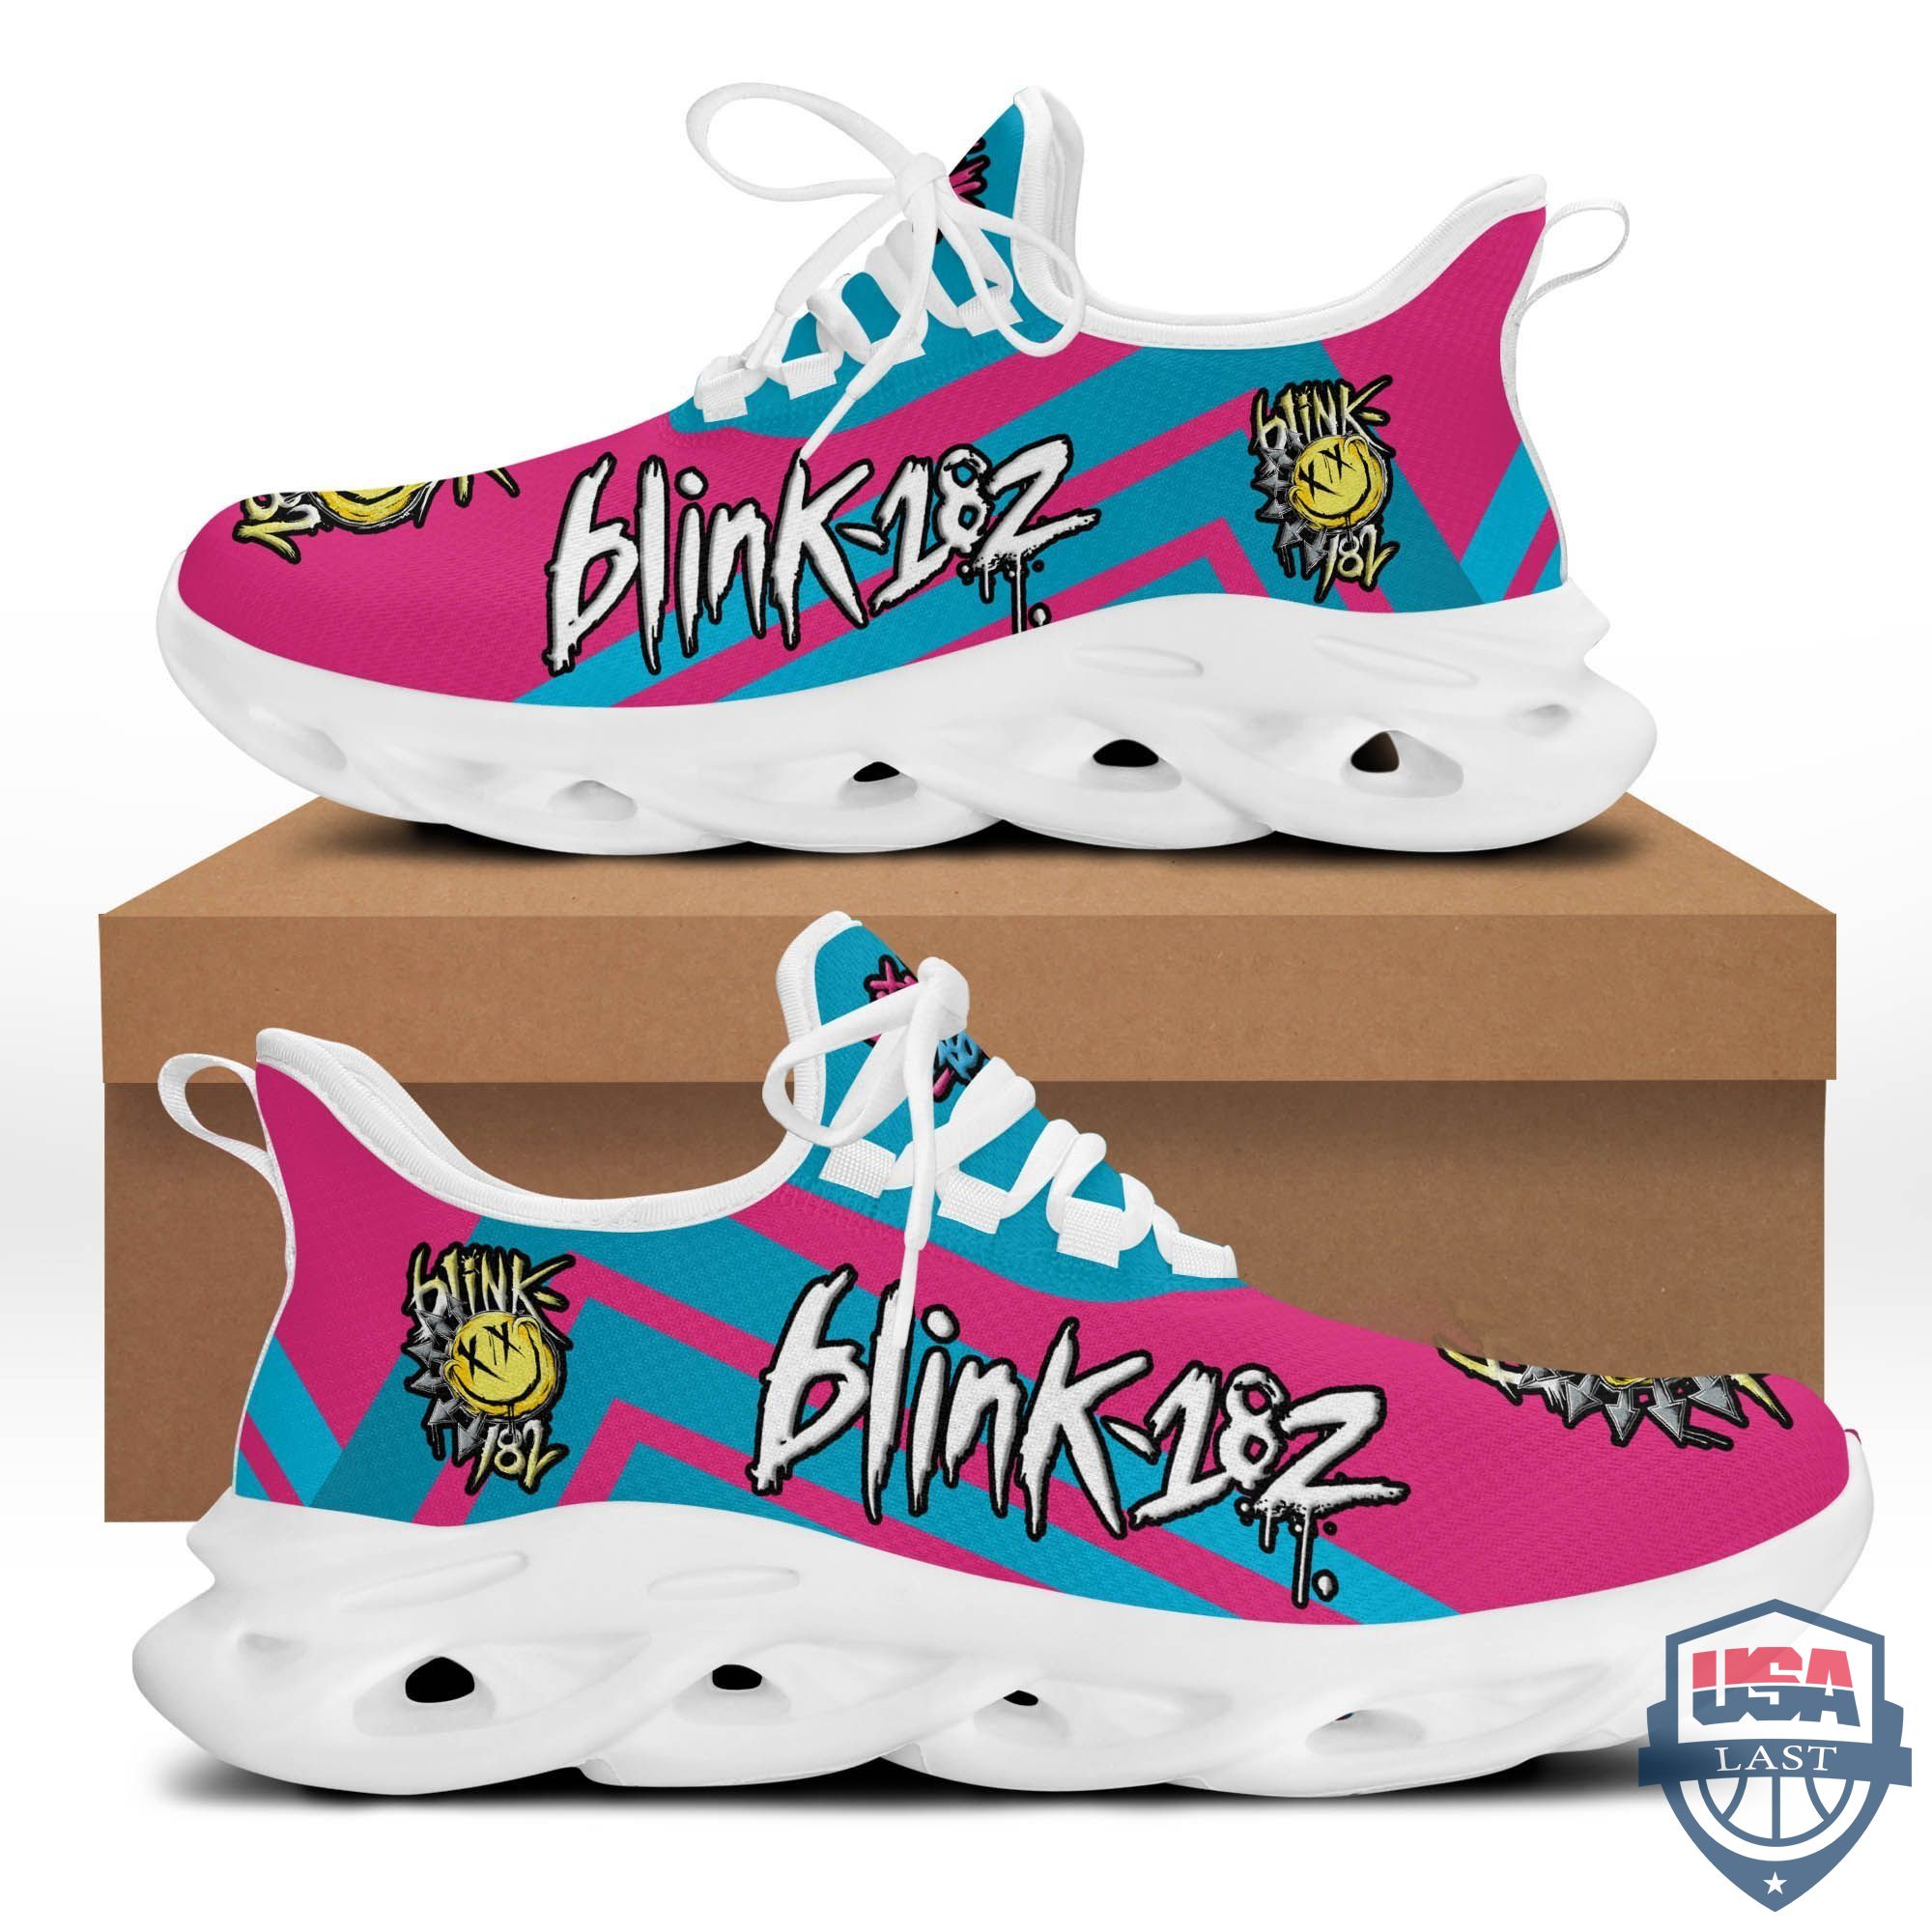 Top Trending – Blink 182 Max Soul Shoes Pink Version